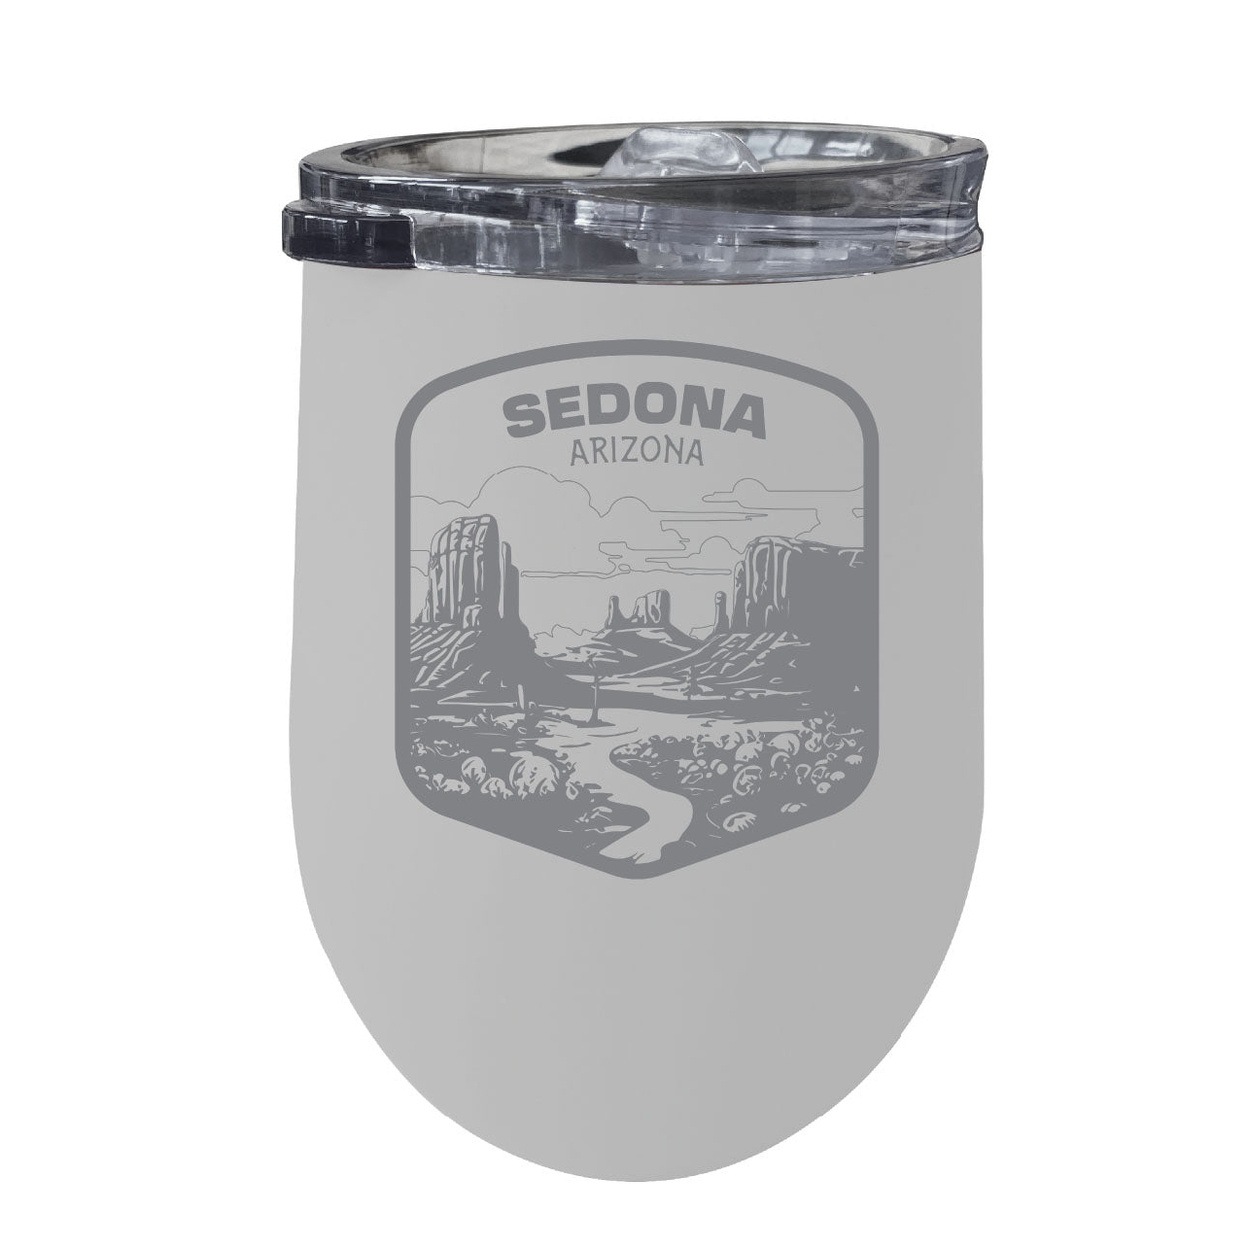 Sedona Arizona Souvenir 12 Oz Engraved Insulated Wine Stainless Steel Tumbler - Rose Gold,,4-Pack